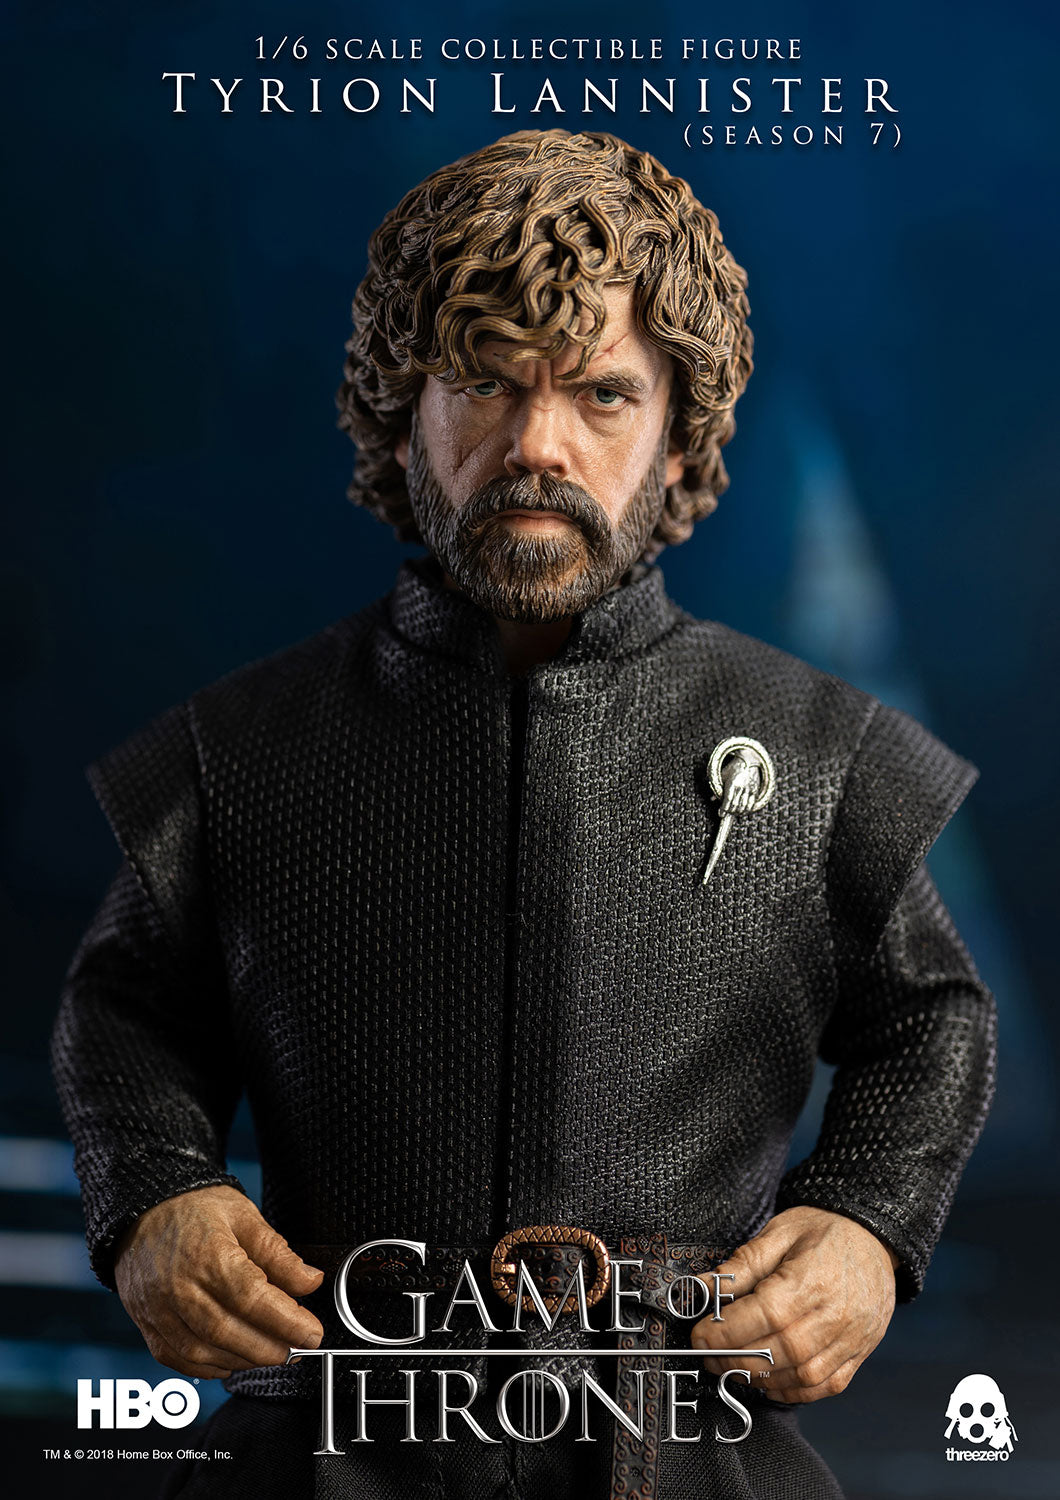 [IN STOCK in AU] Threezero HBO Game of Thrones GOT Tyrion Lannister Season 7 Deluxe Version 1/6